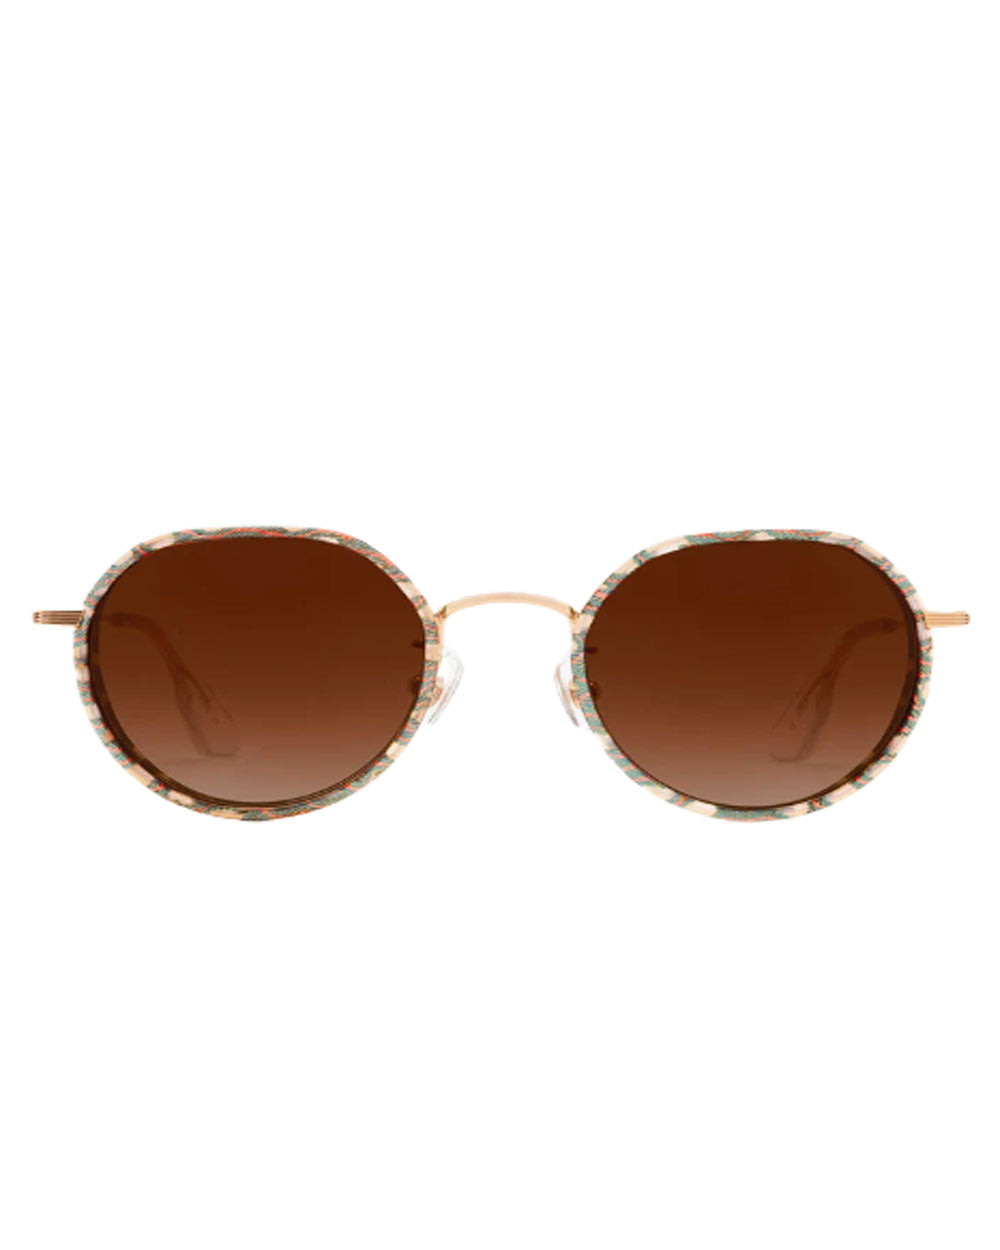 Calliope Sunglasses in Como